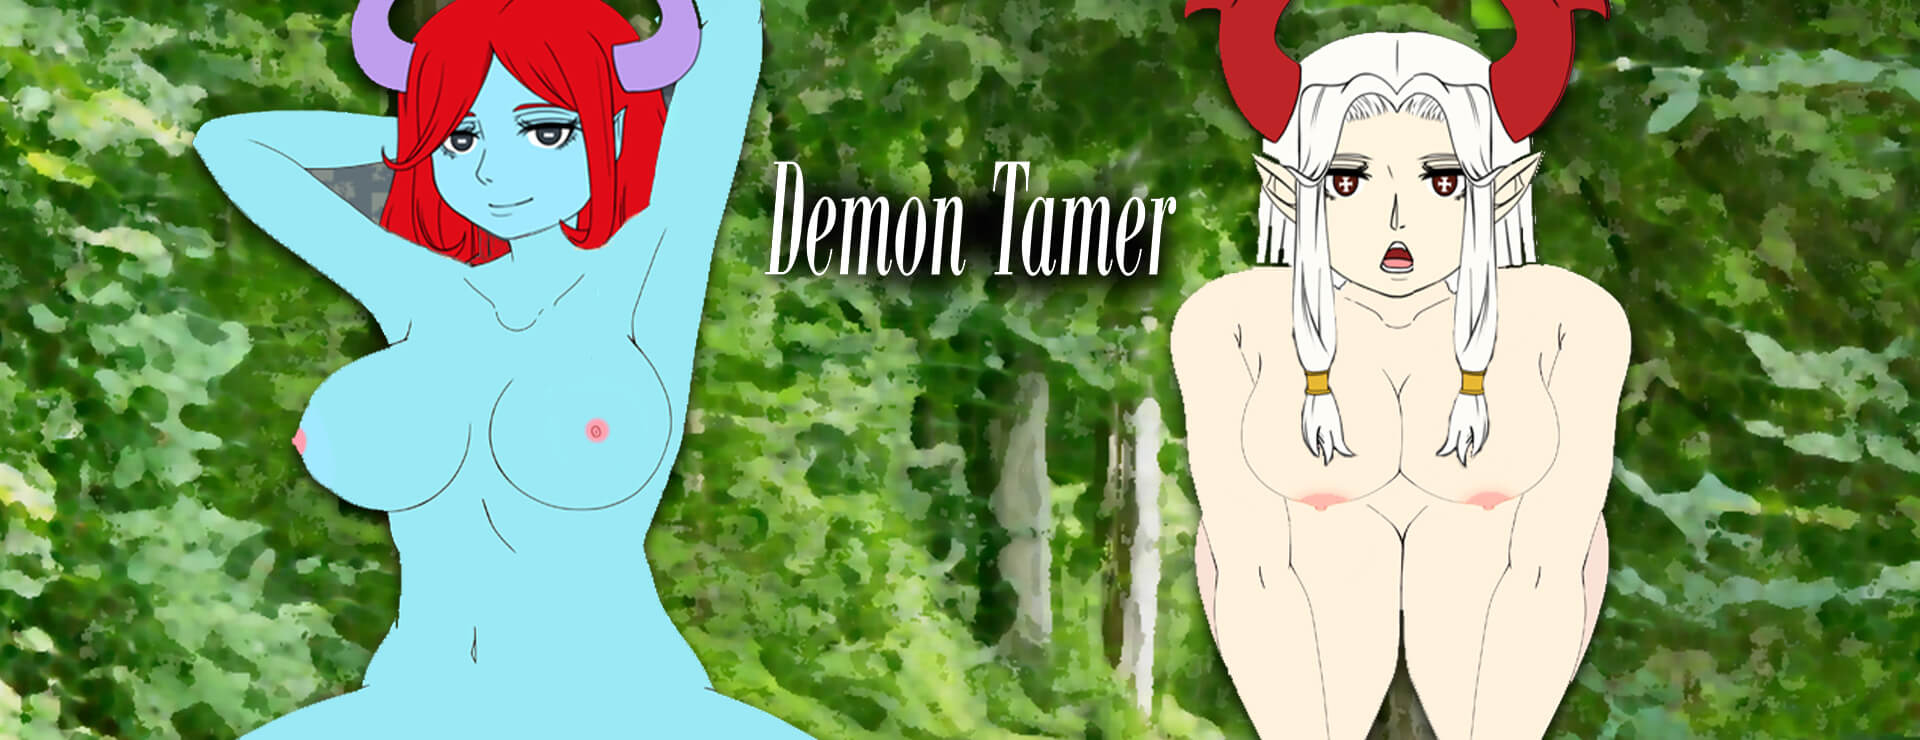 Demon Tamer - RPG Game